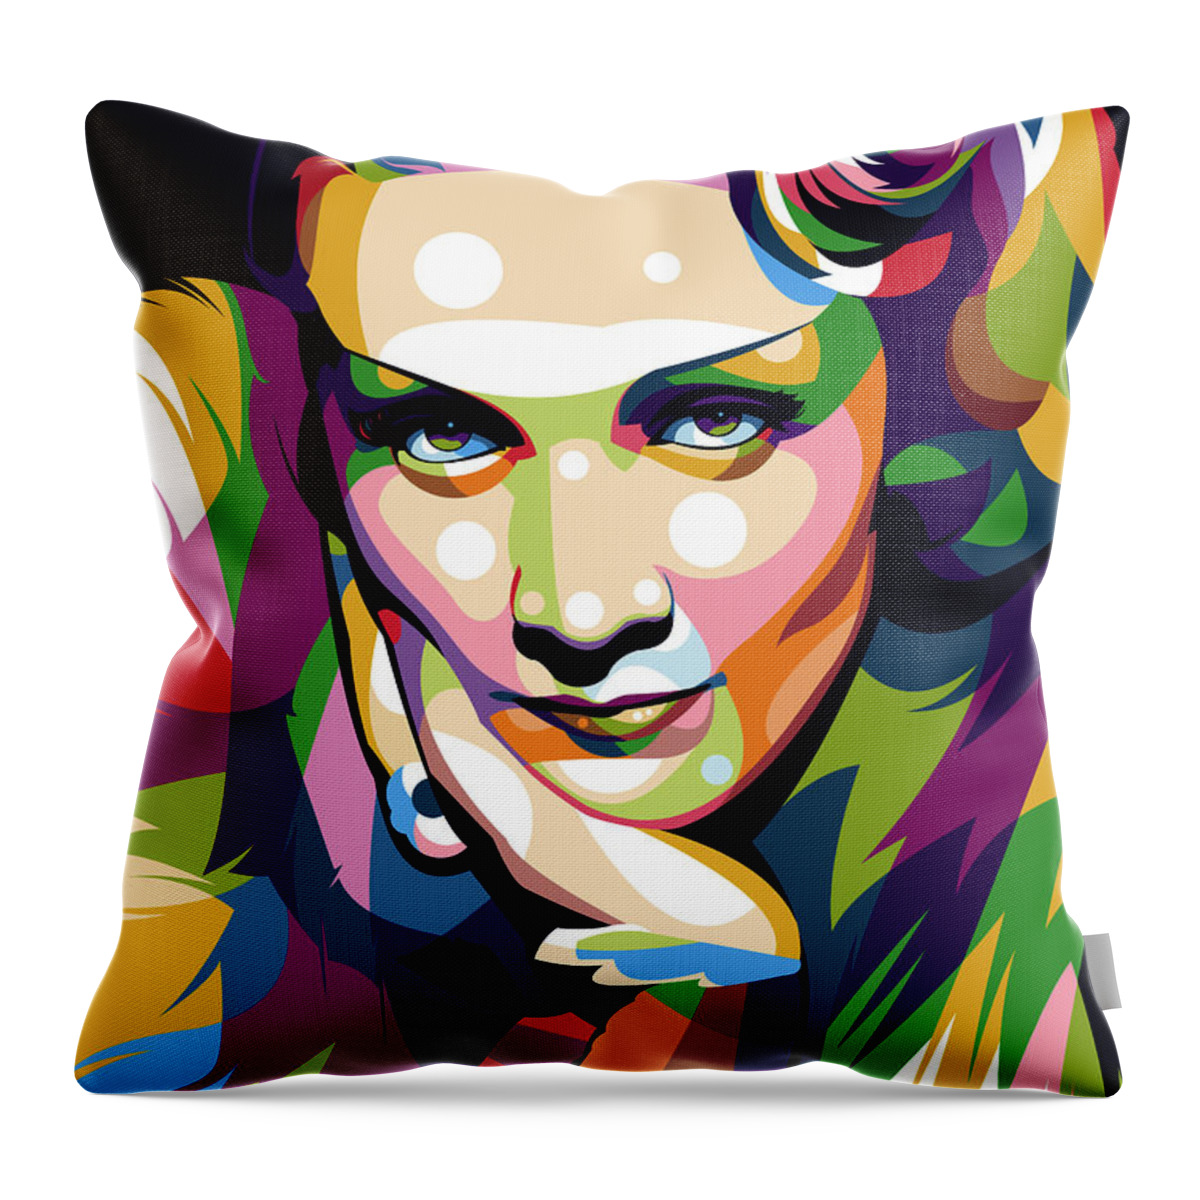 Marlene Dietrich Throw Pillow featuring the digital art Marlene Dietrich by Movie World Posters